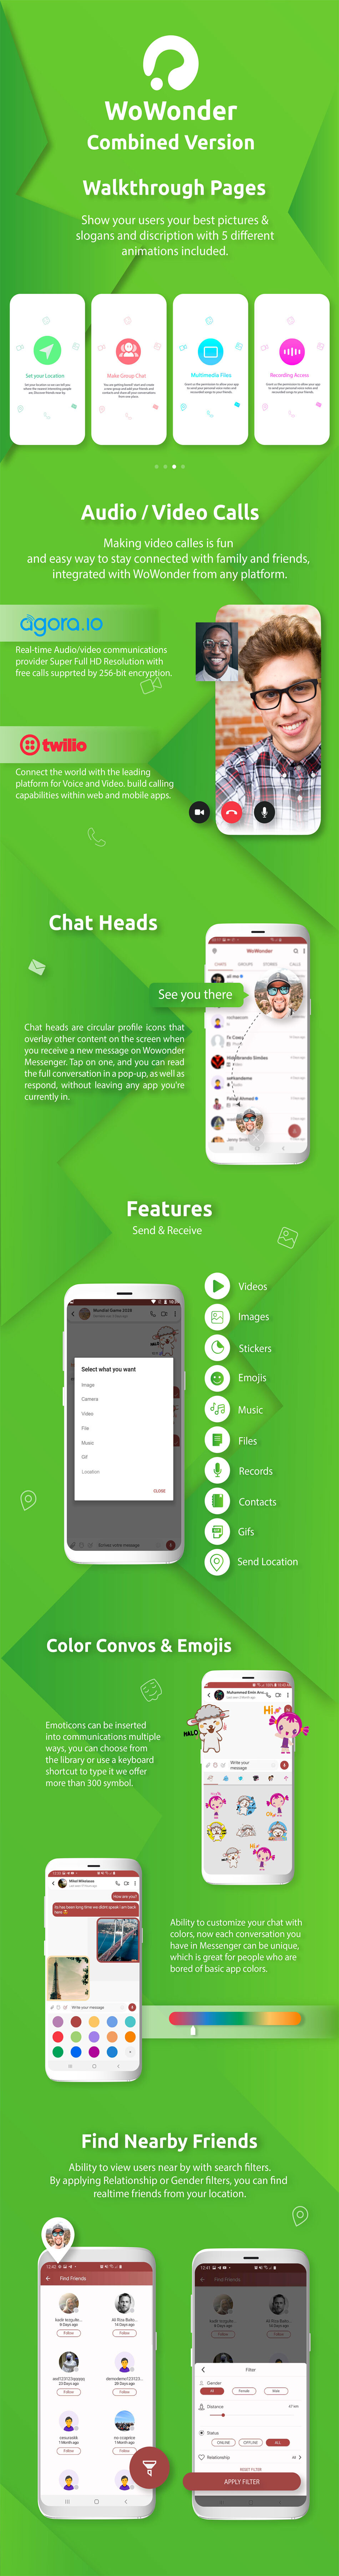 WoWonder Android Messenger - Mobile Application for WoWonder Social Script - 3